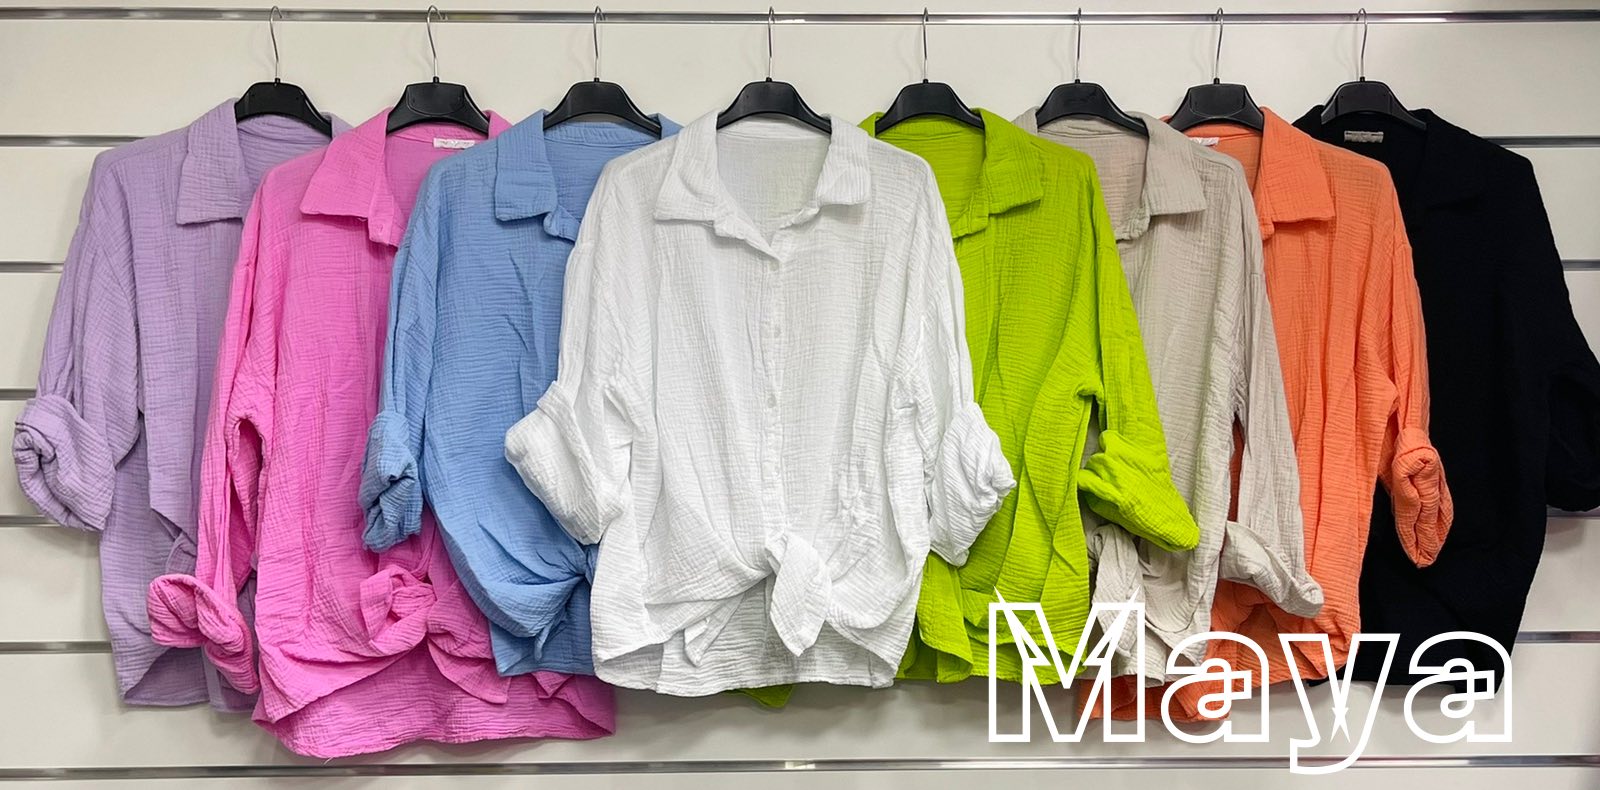 Koszula  damska (Włoskie produkt) Roz Standard Mix kolor Paczka 5 szt